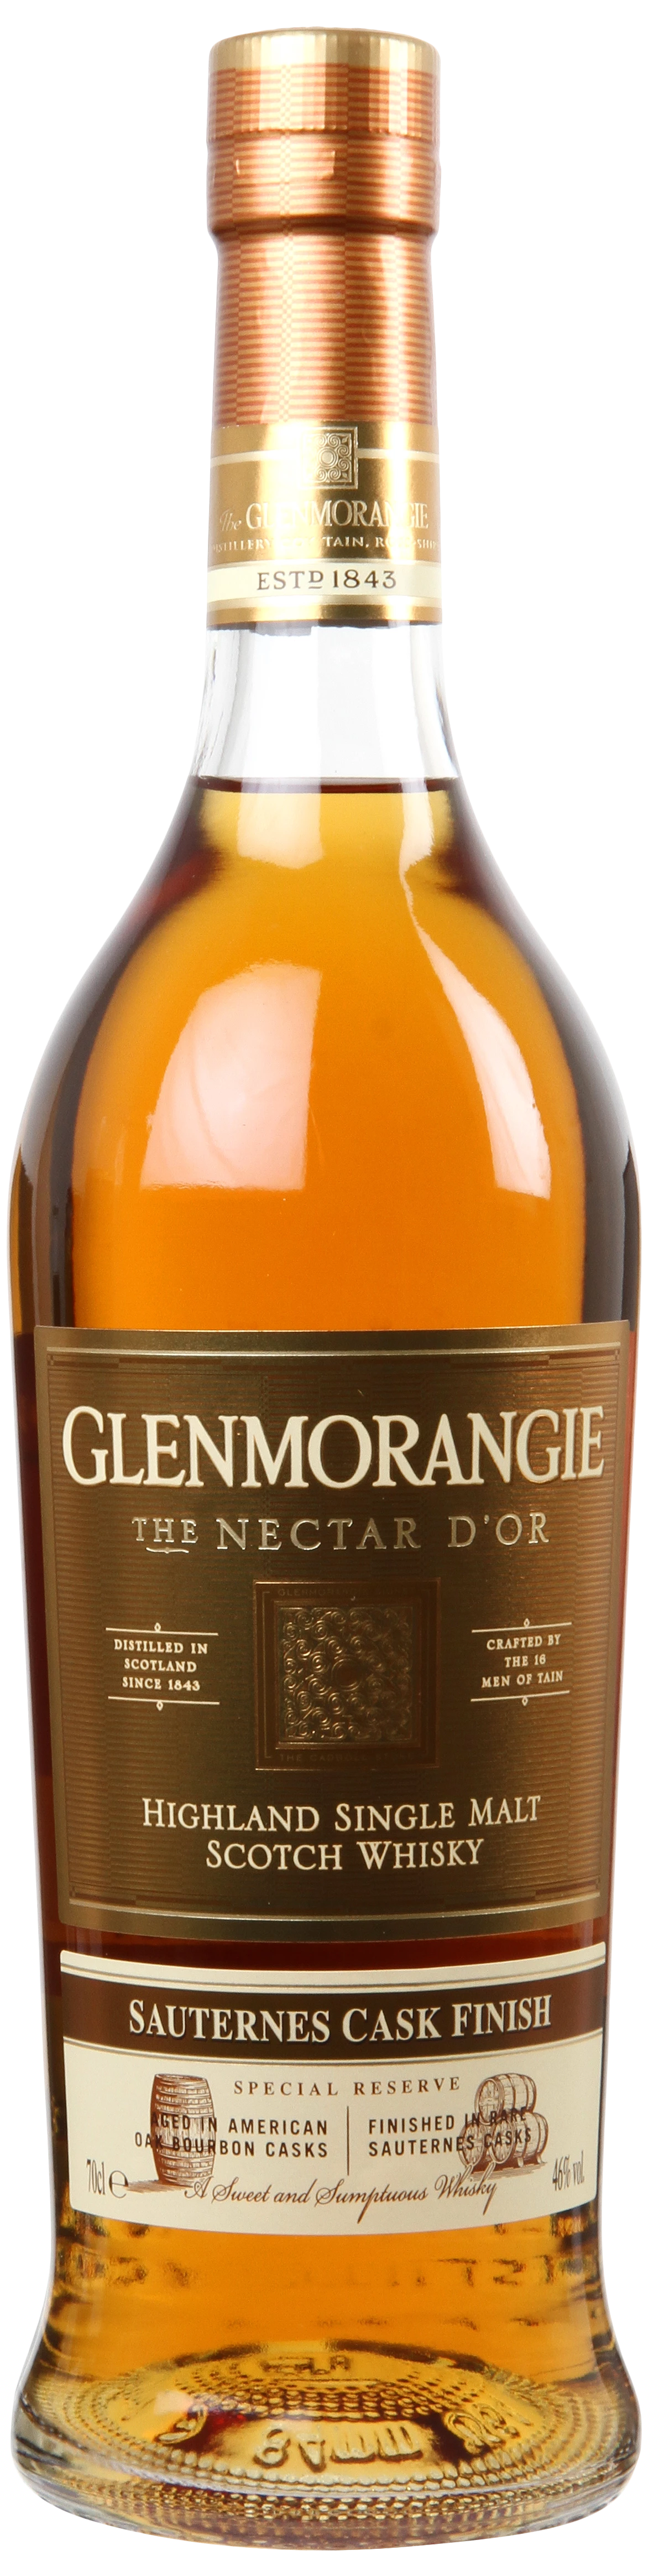 Løgismose Spiritus Glenmorangie Highland Skotland 46% Glenmorangie Whisky Nectar D'Or Æske - 221142 2